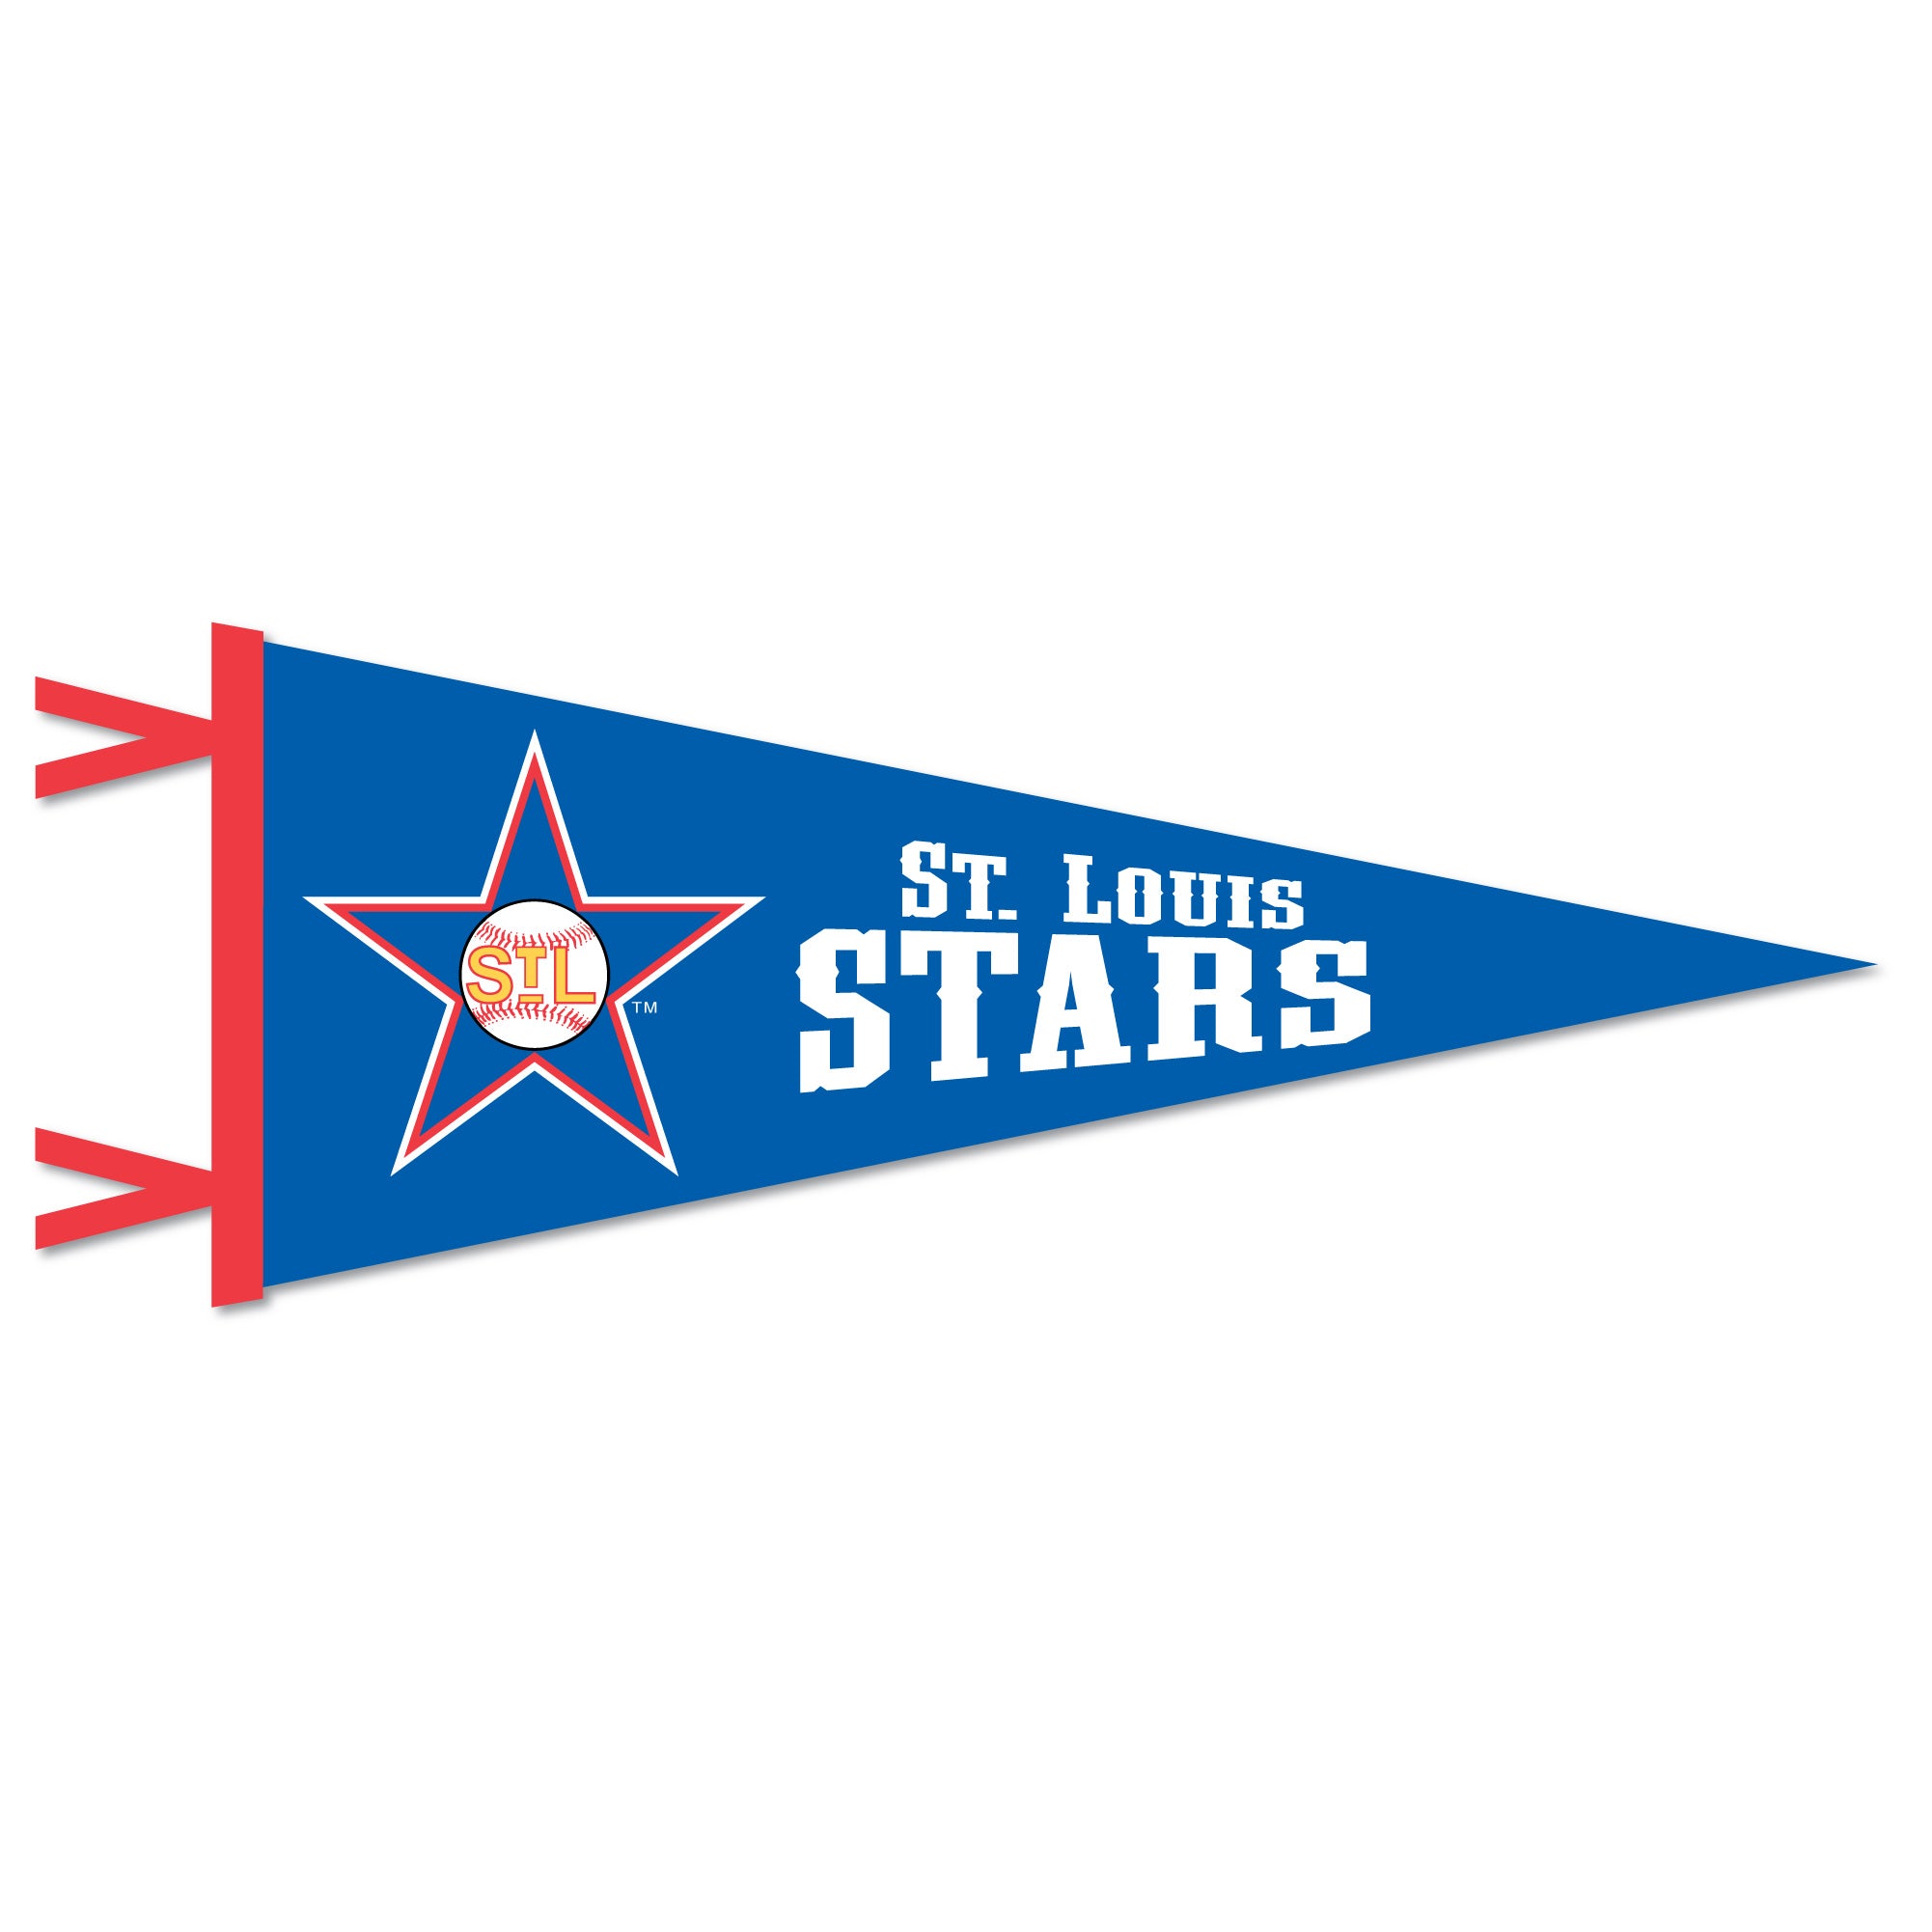 St. Louis Stars Pennant